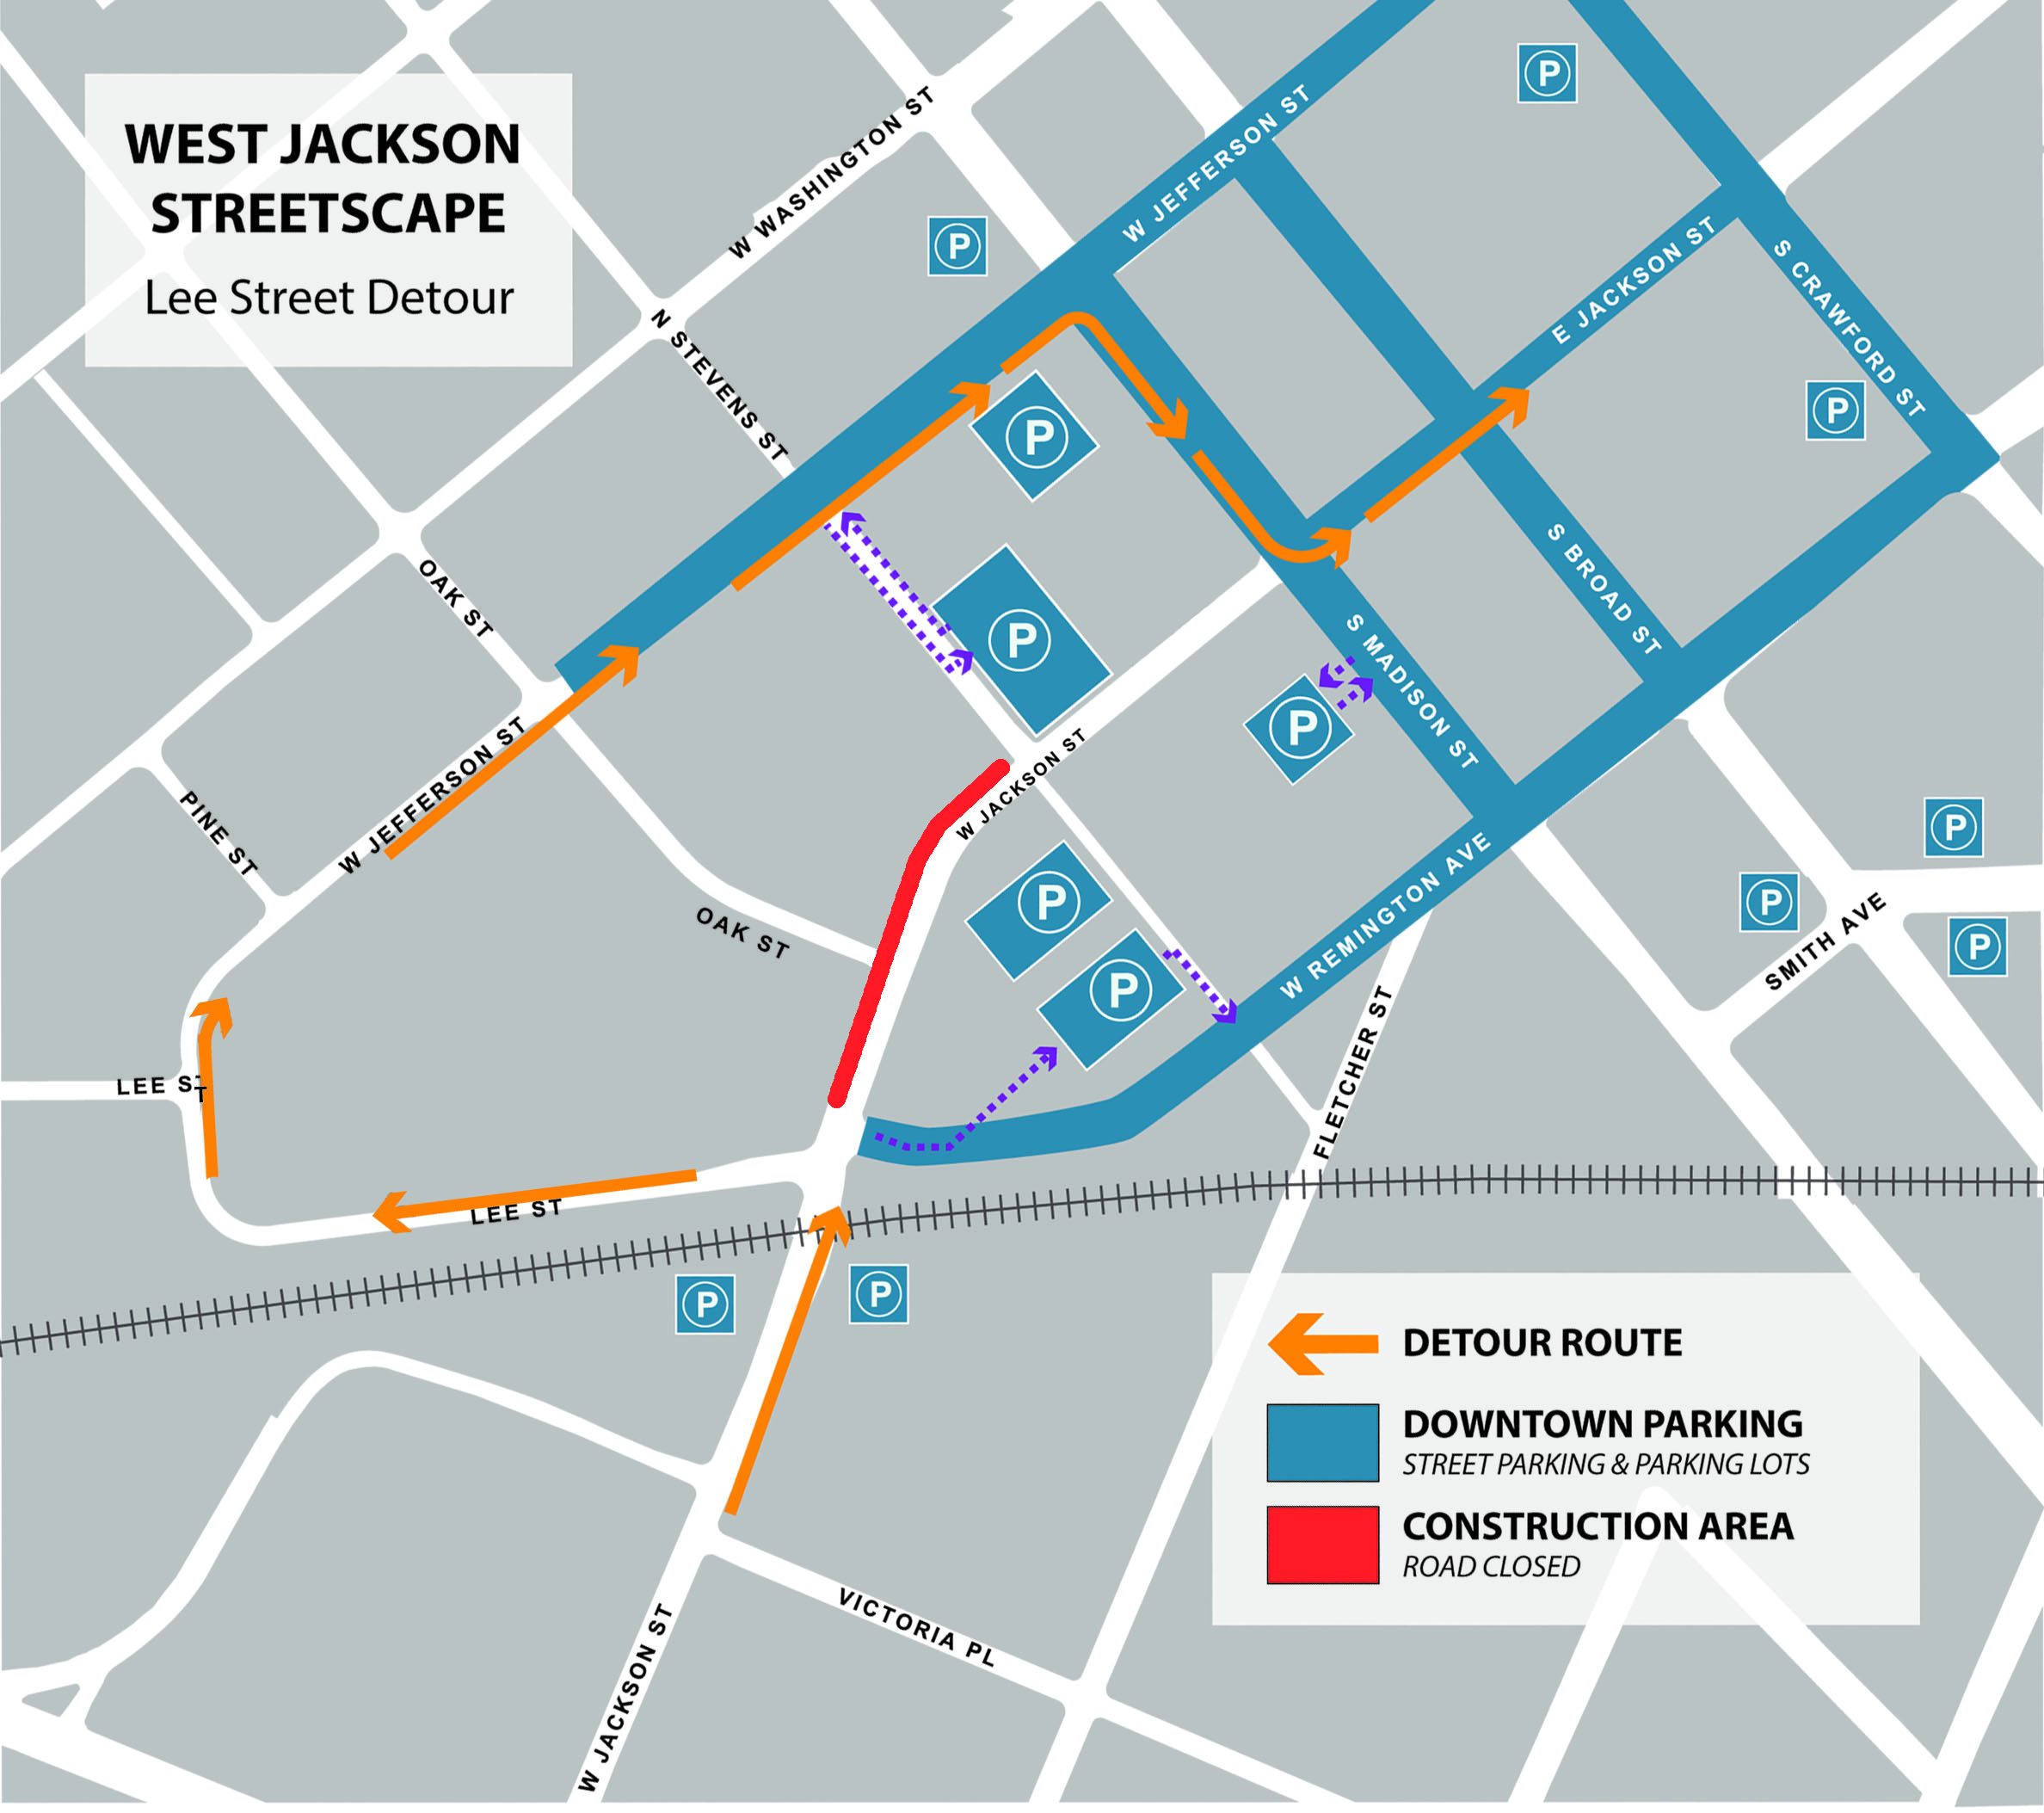 Lee Street Detour Map for West Jackson Street